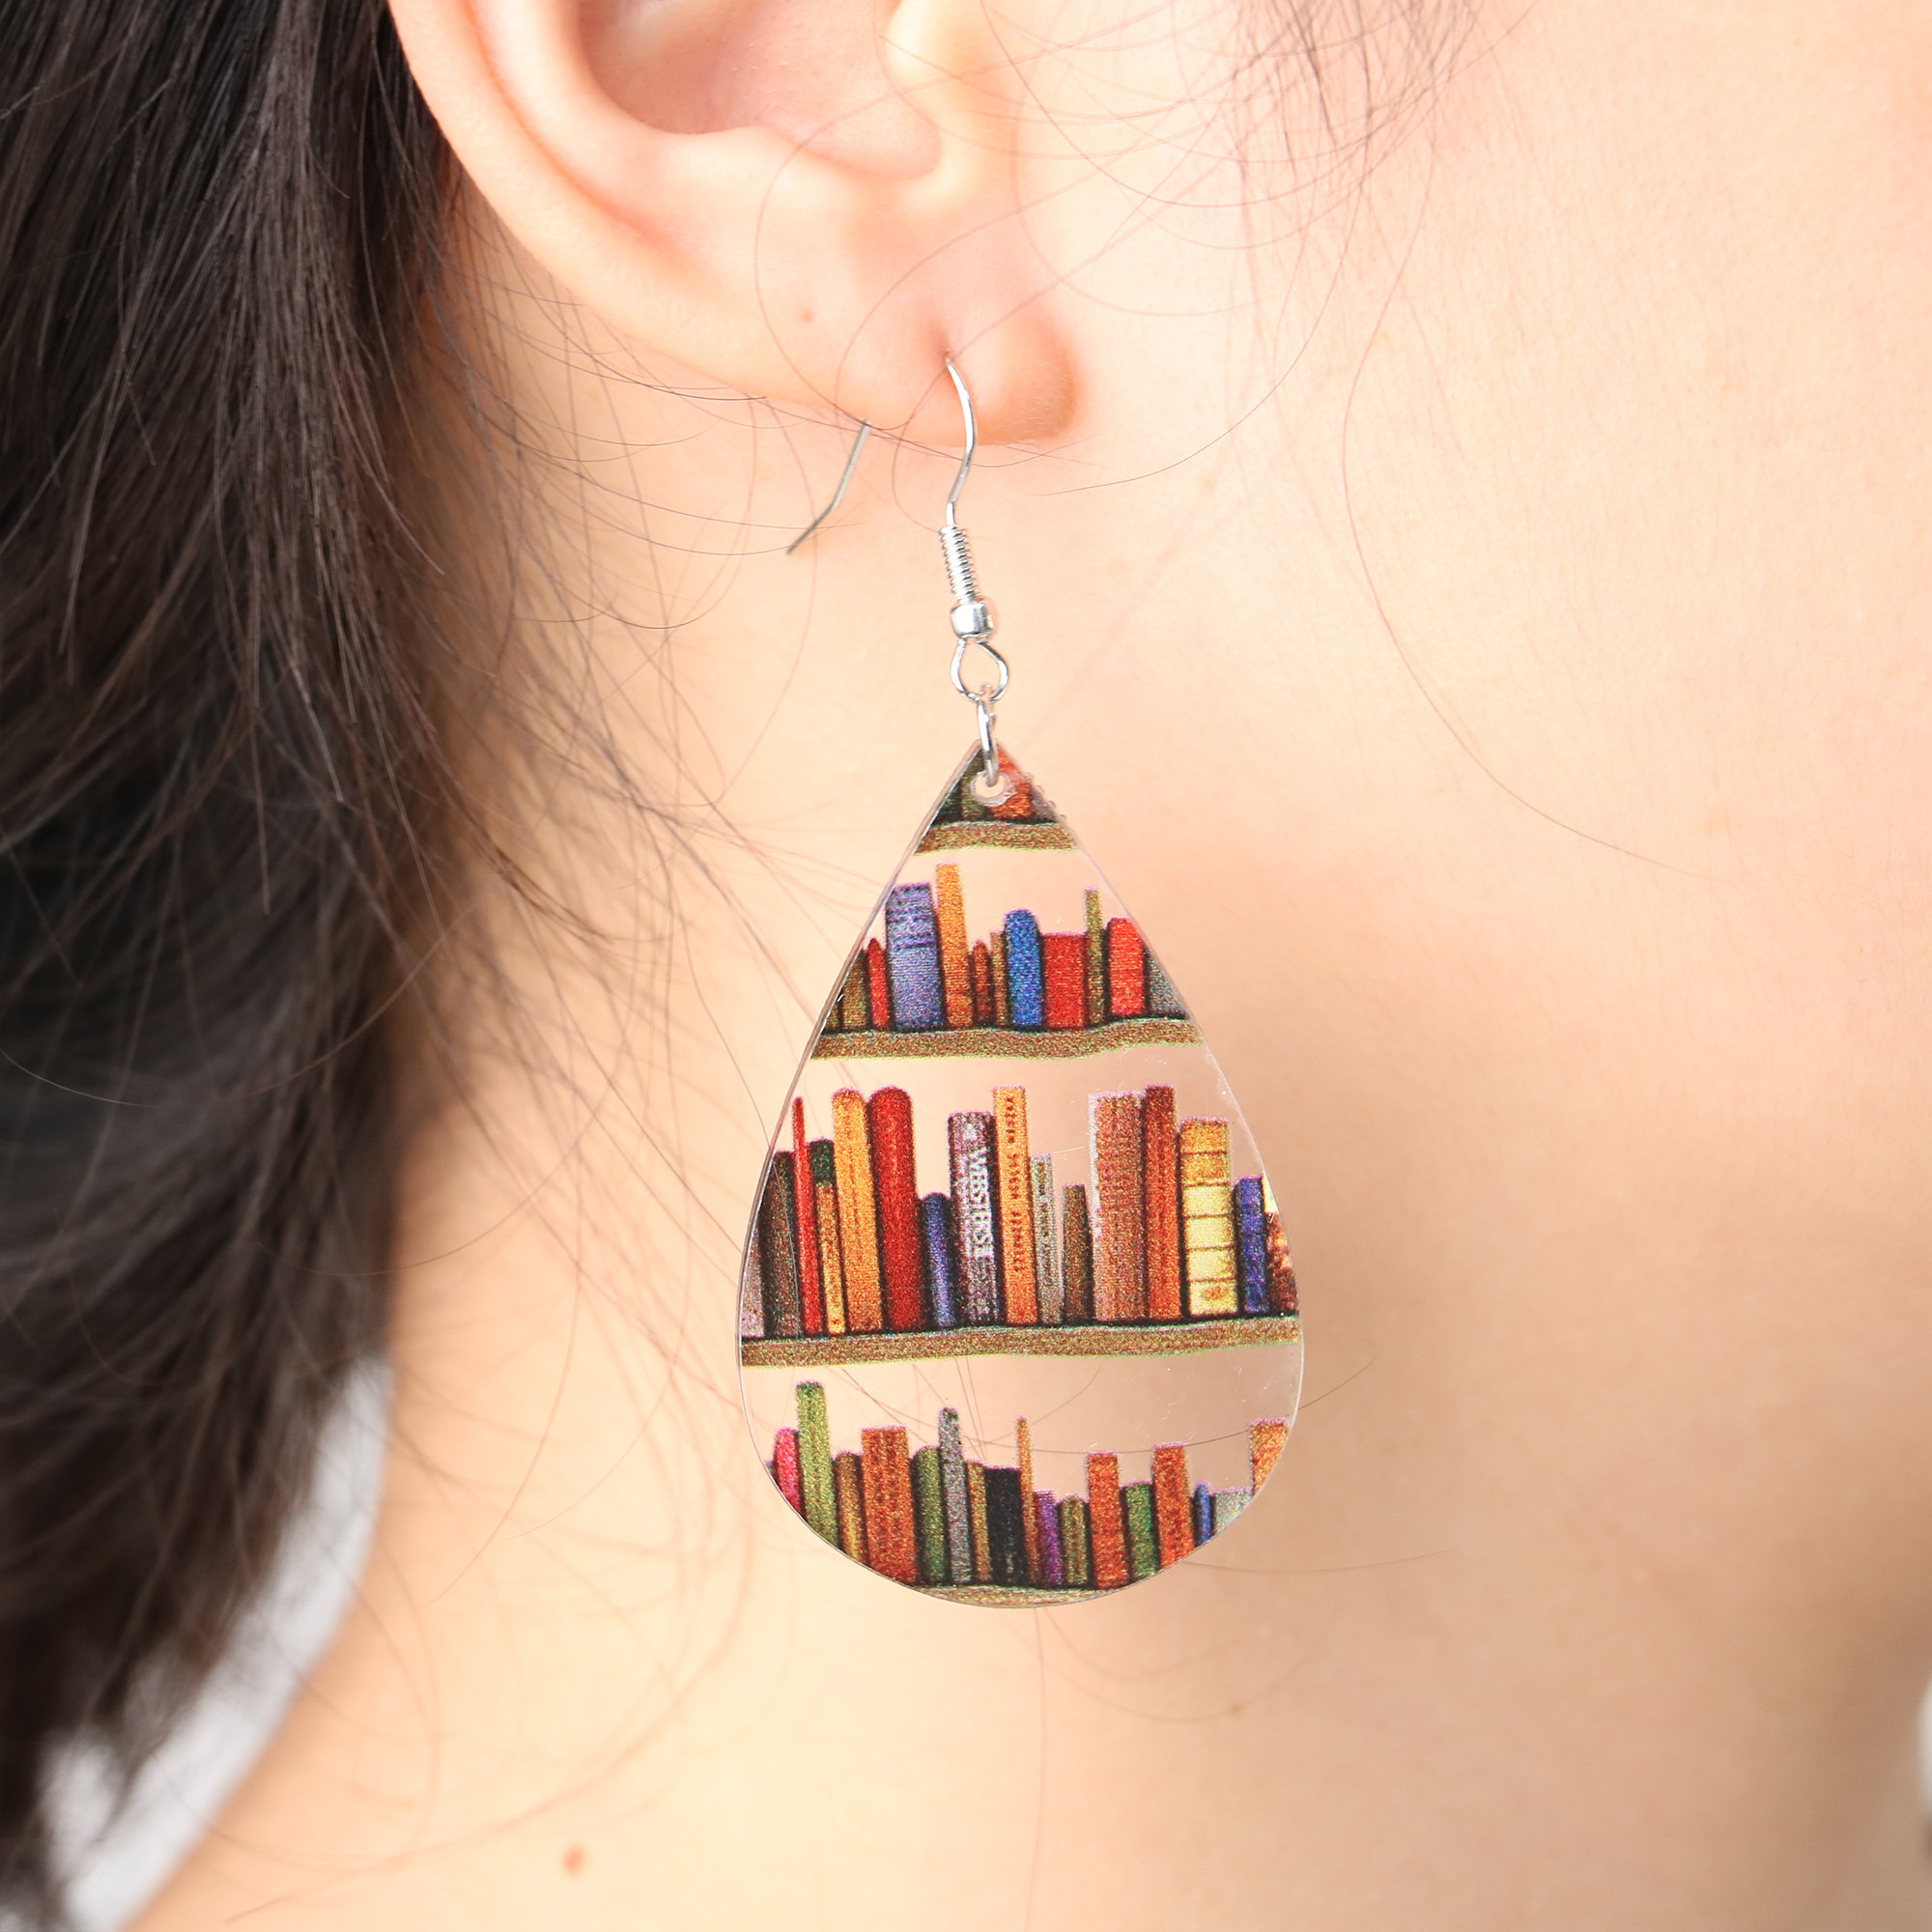 🌟Promotion 49% Off🔥-📚BOOK EARRINGS /EARRINGS FOR BOOK LOVERS